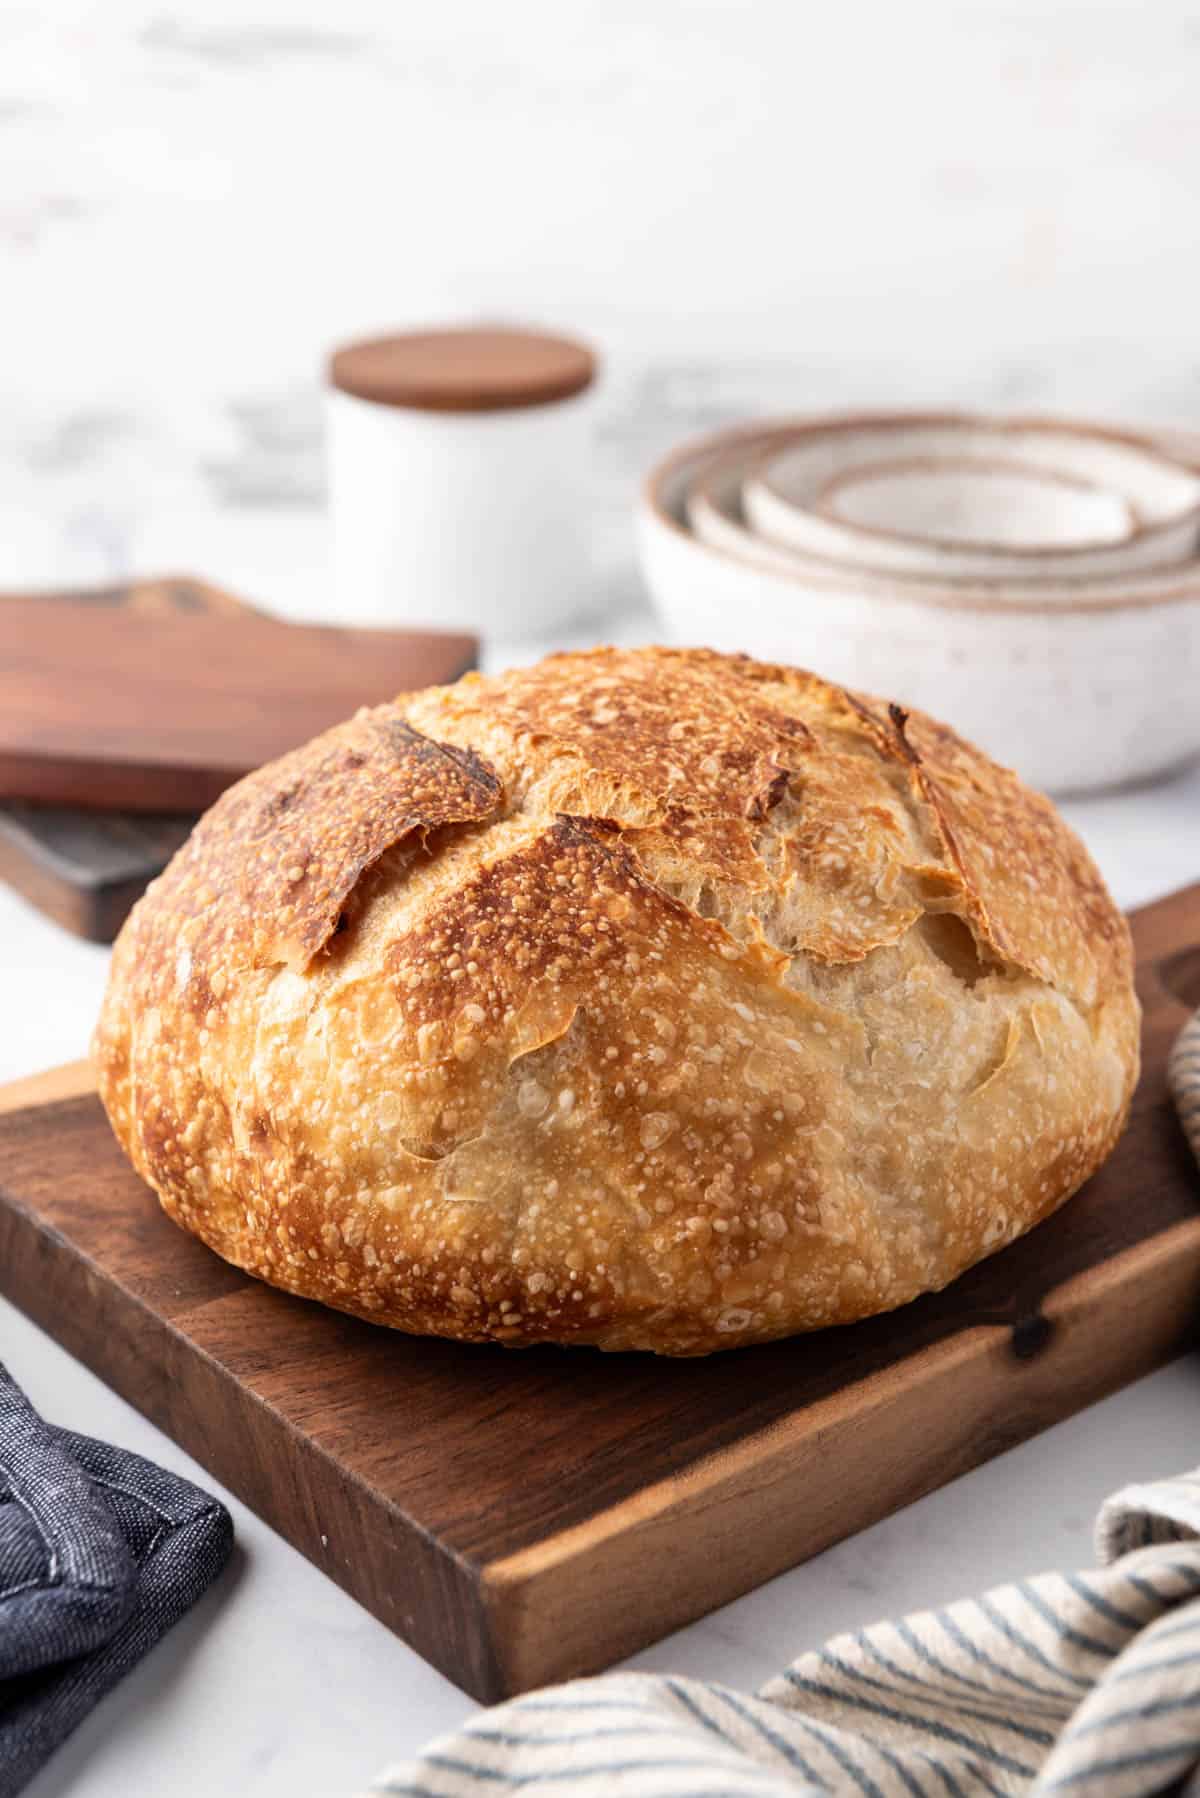 Homemade Sourdough Bread